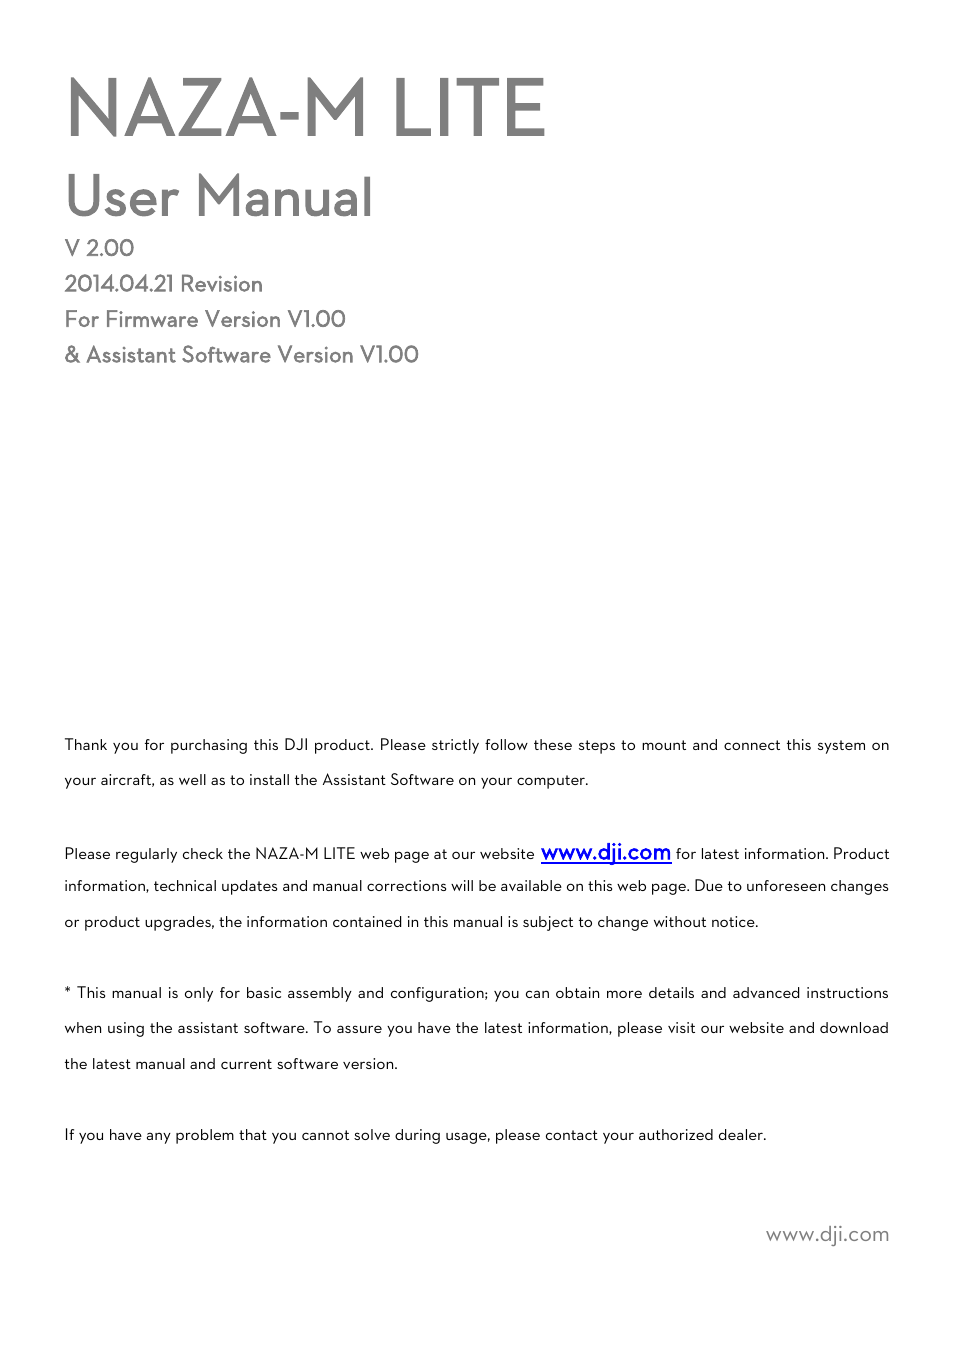 DJI Naza-M Lite User Manual | 45 pages